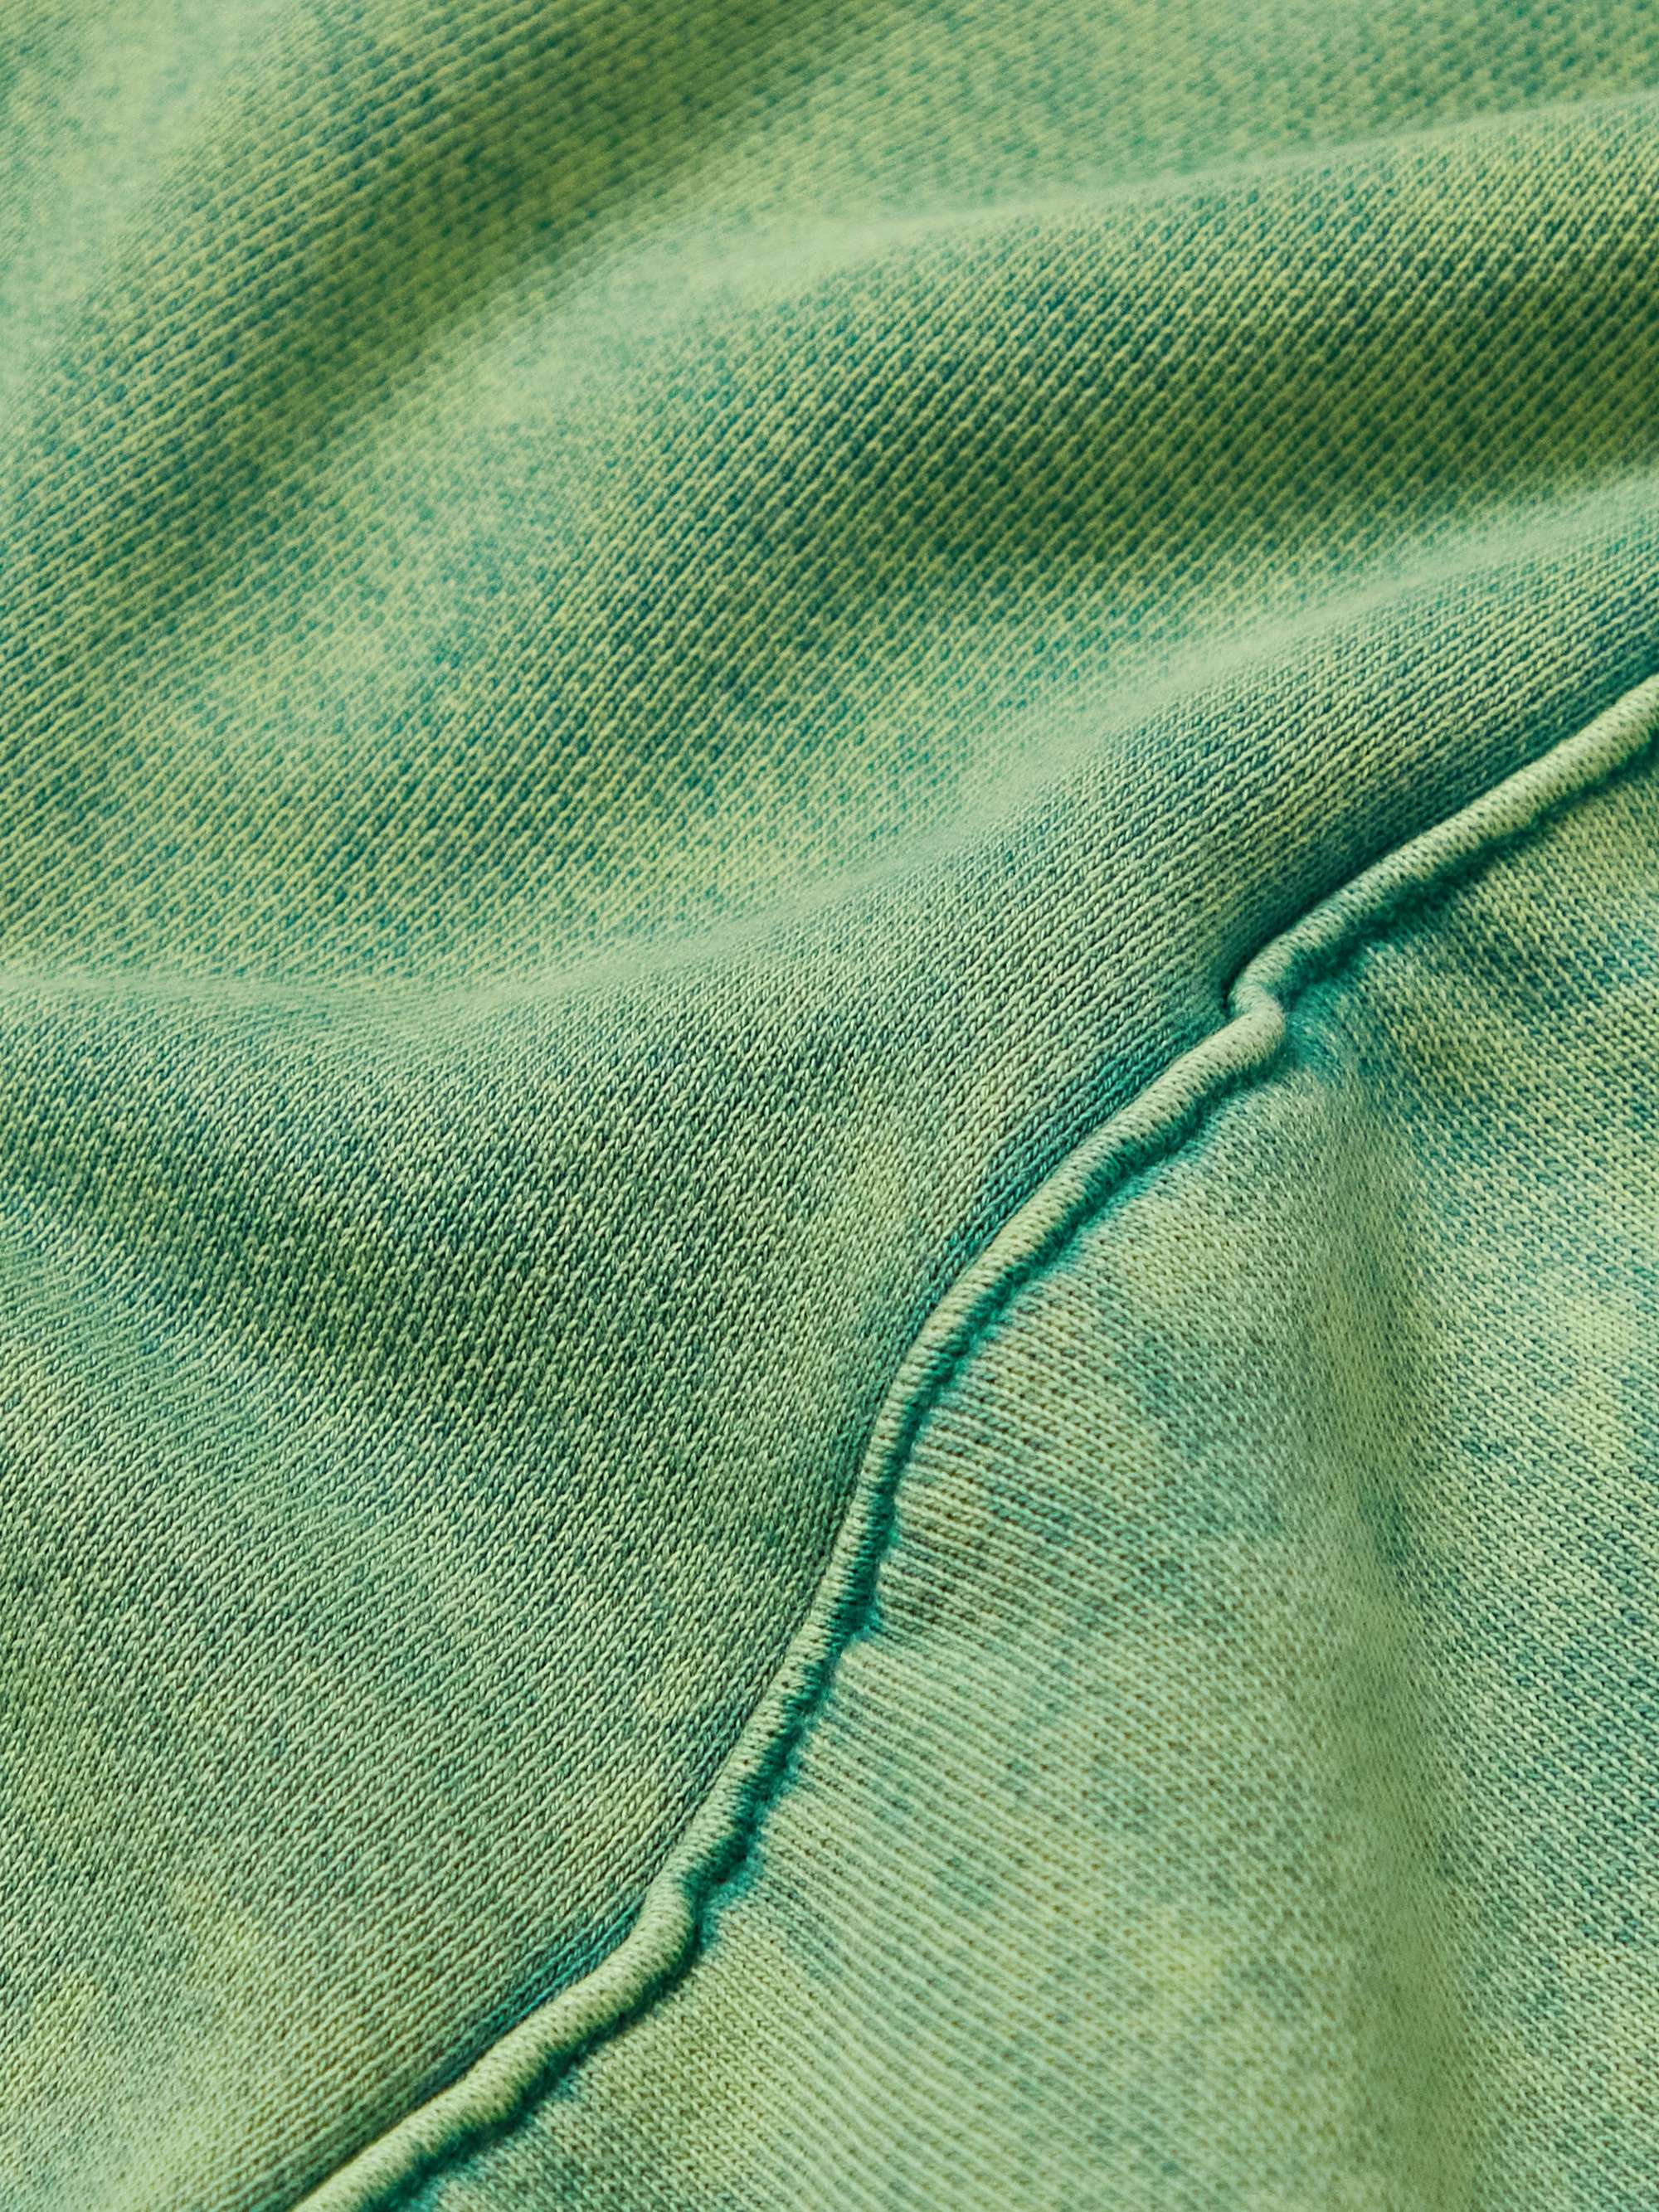 LES TIEN Garment-Dyed Cotton-Jersey Hoodie